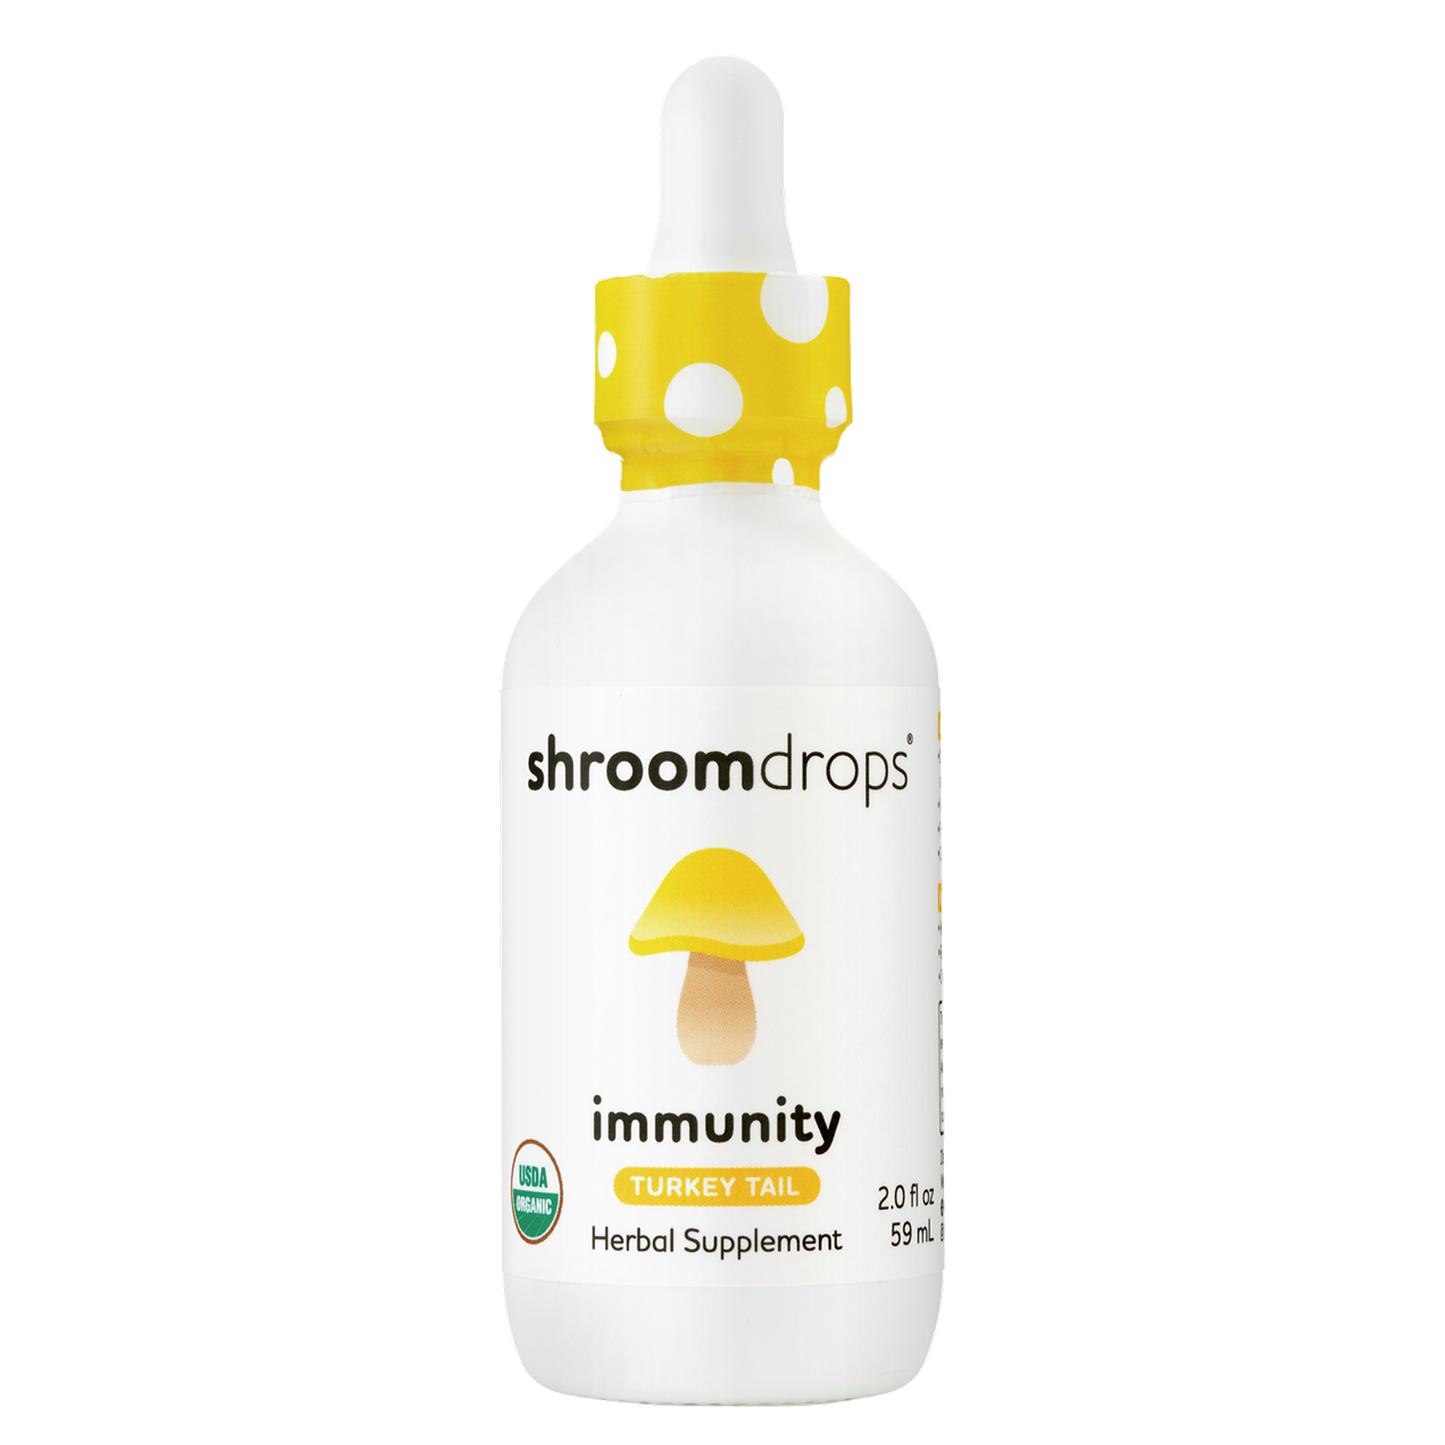 Immunity by shroomworks